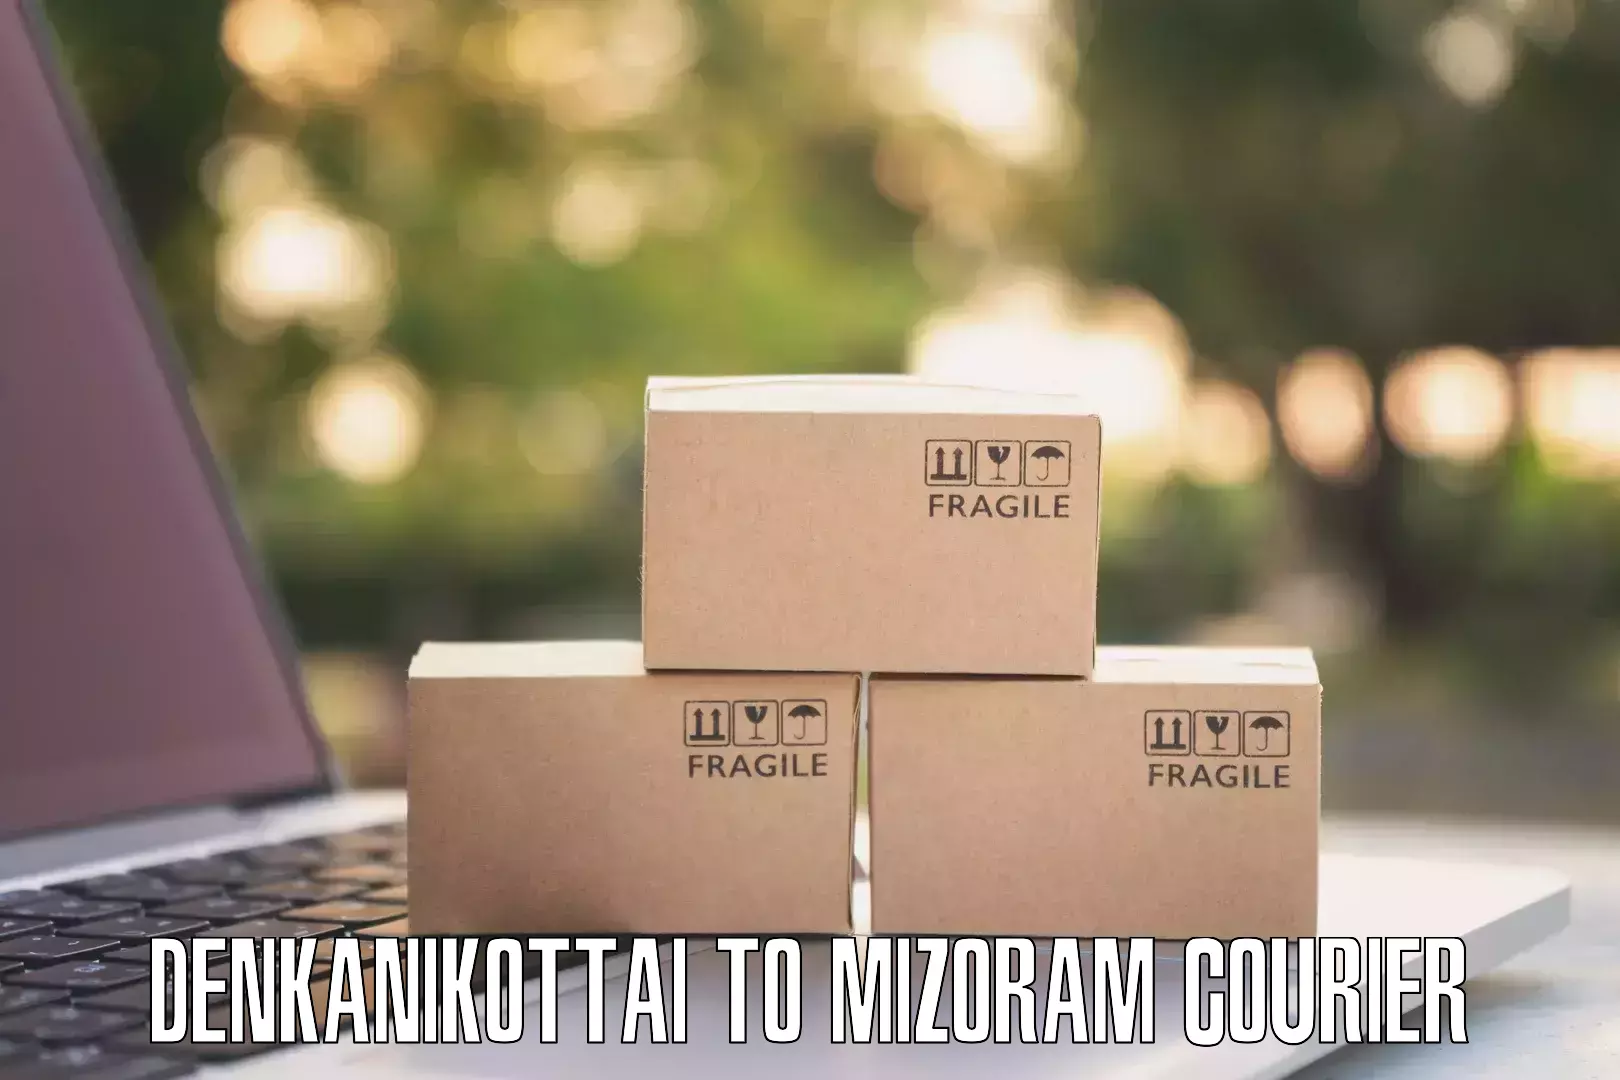 Individual parcel service Denkanikottai to Mizoram